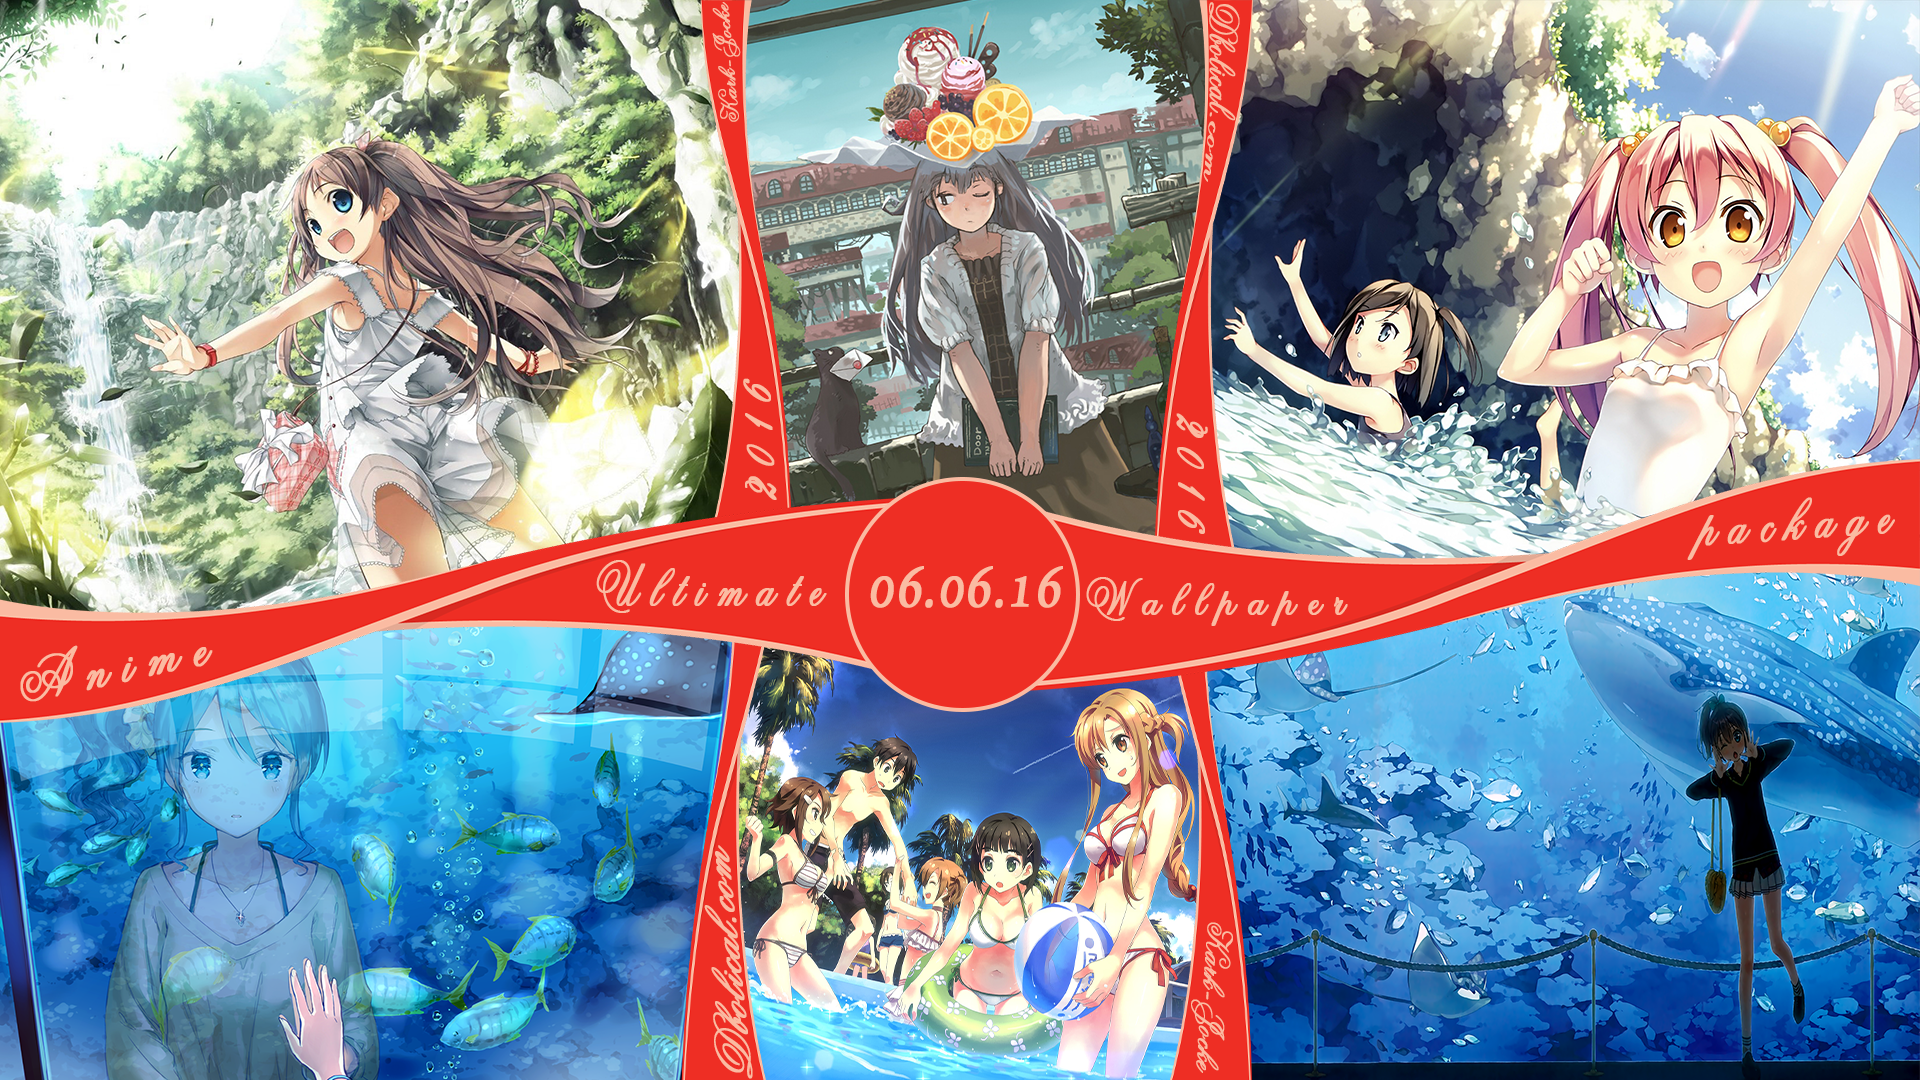 Anime wallpaper file - ModDB